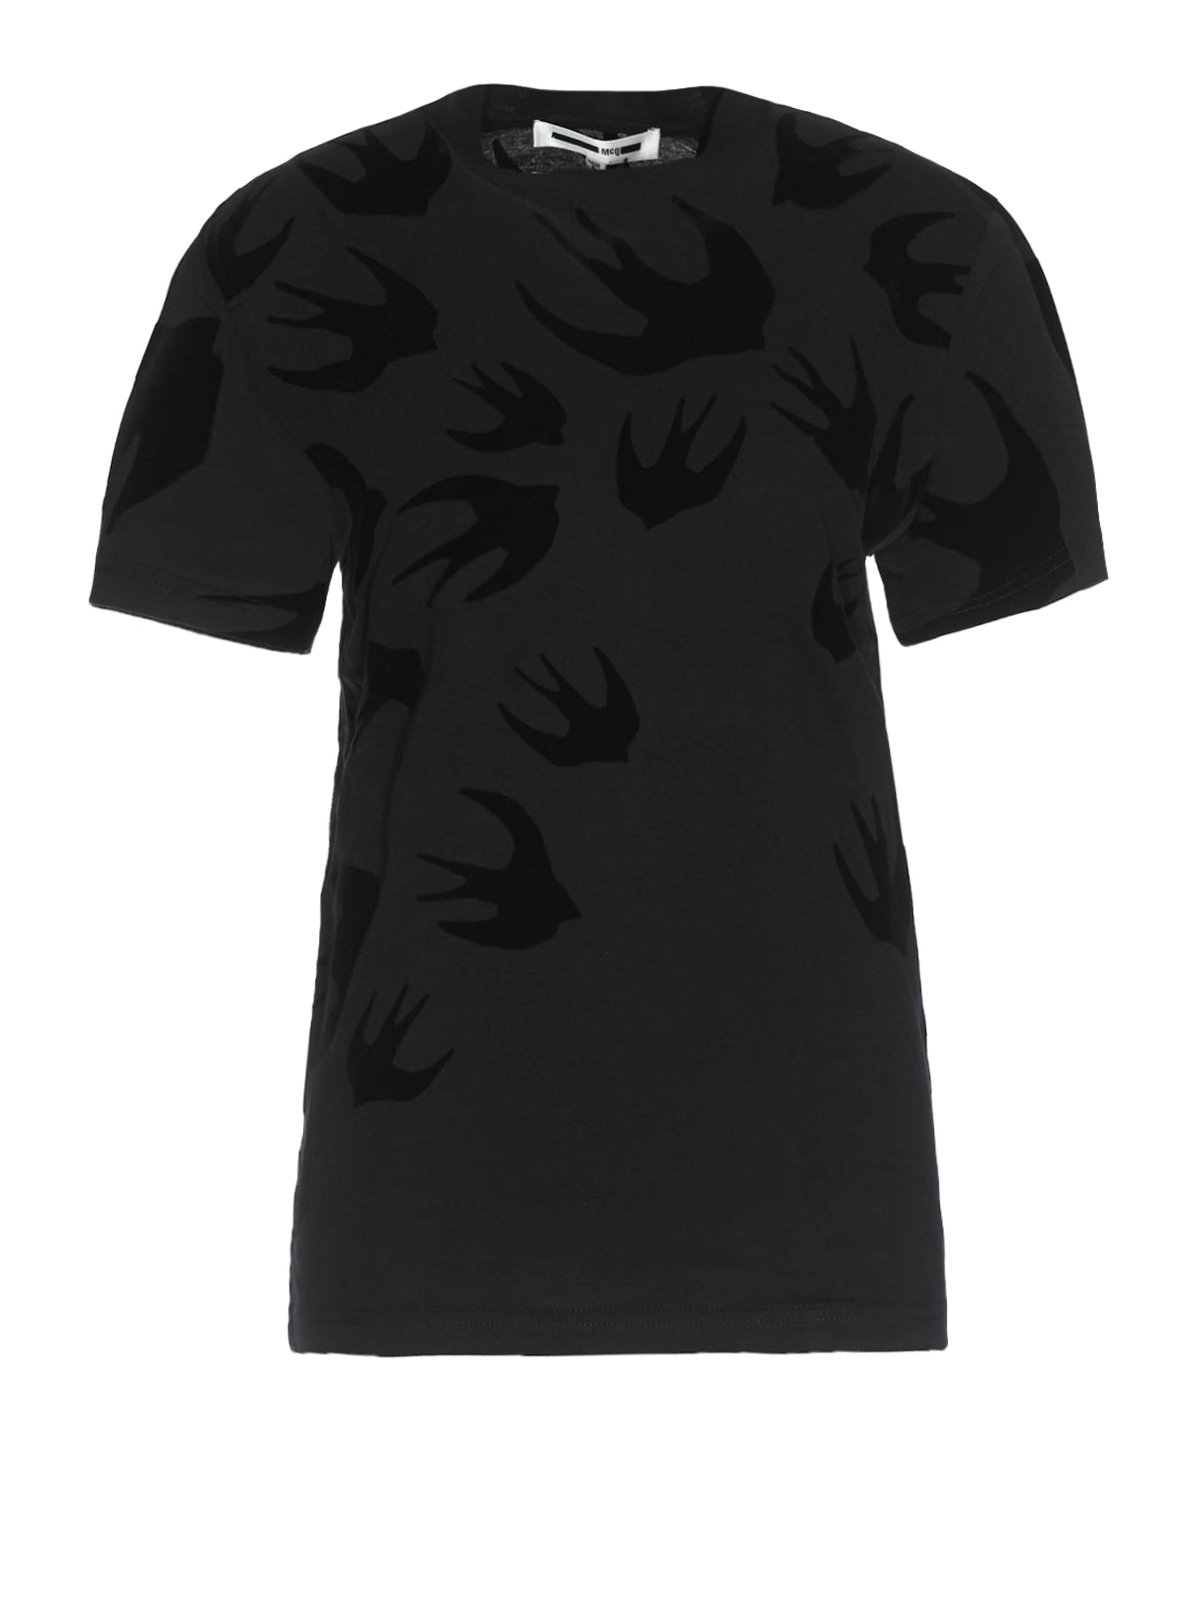 Mcq By Alexander Mcqueen Swallow Flock Print Black T-shirt